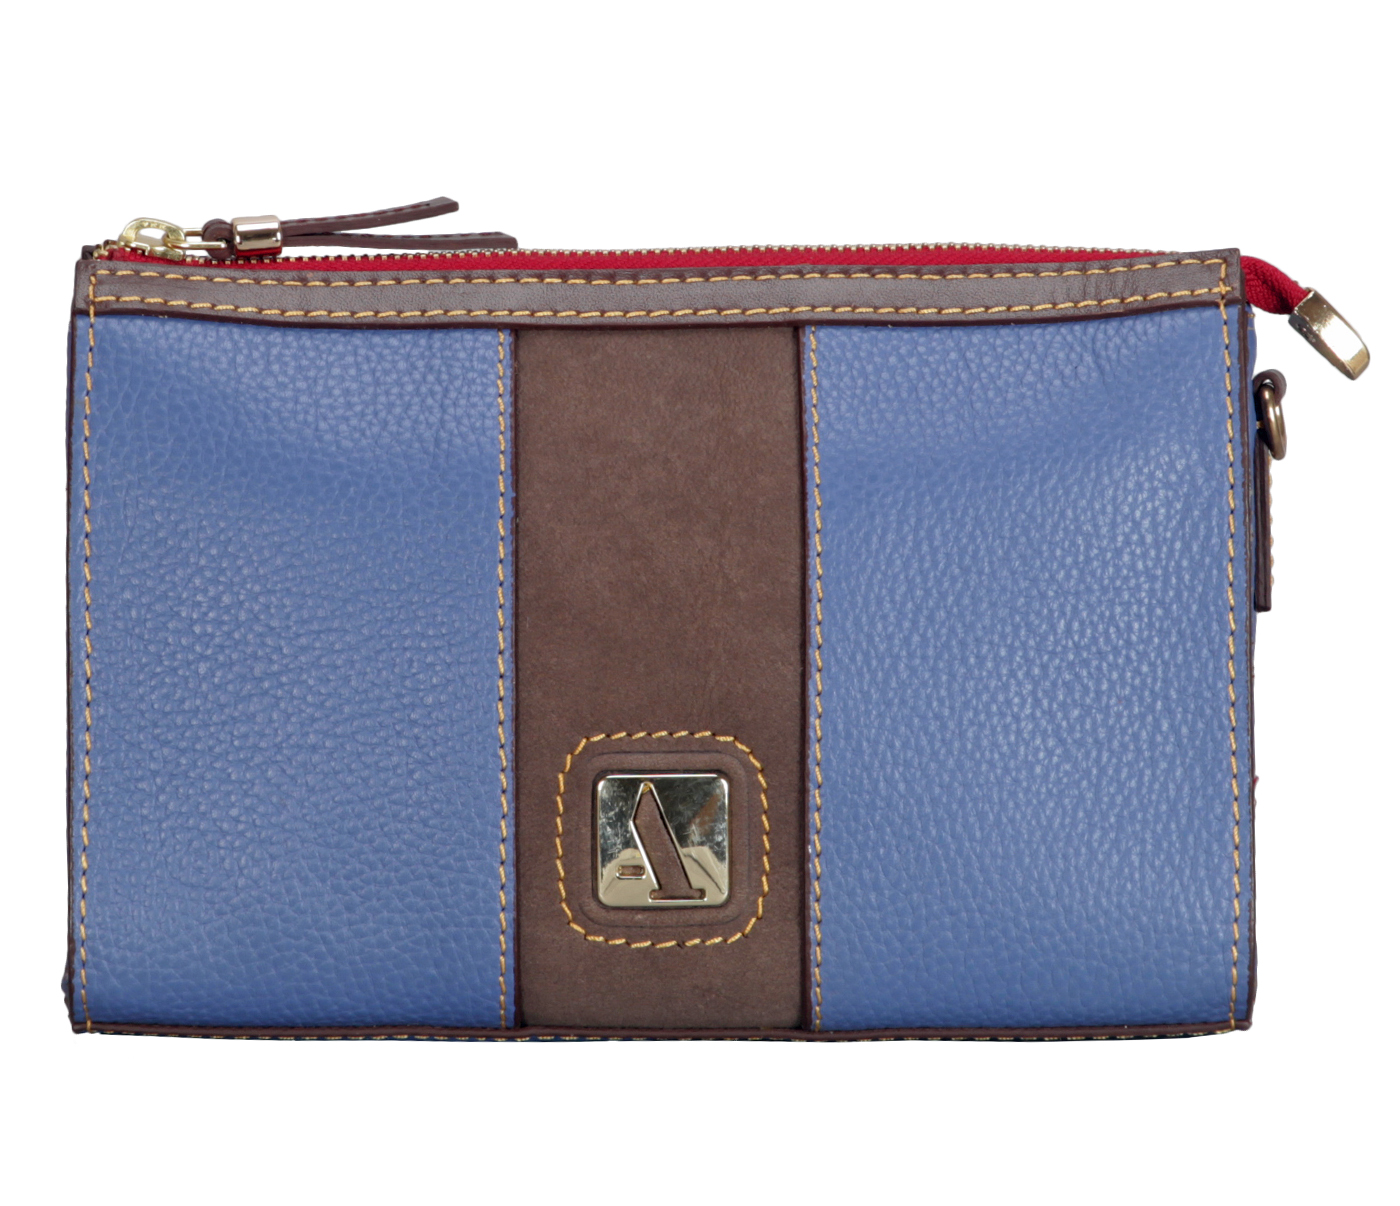 Handbag-Franka-Sling cross body bag in Genuine Leather - Blue